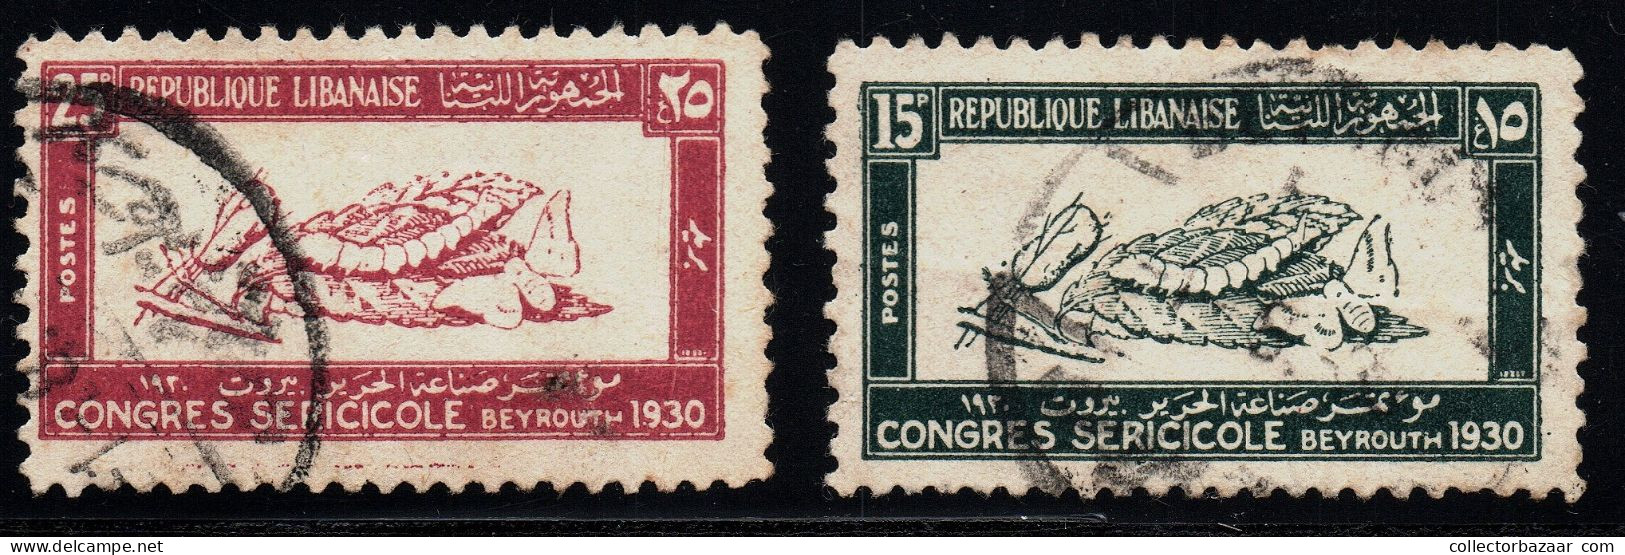 Liban Lebanon Silk Moth Michel 163-164 Used Scott 112 - 113 Very Nice Stamps Cv$25 - Lebanon